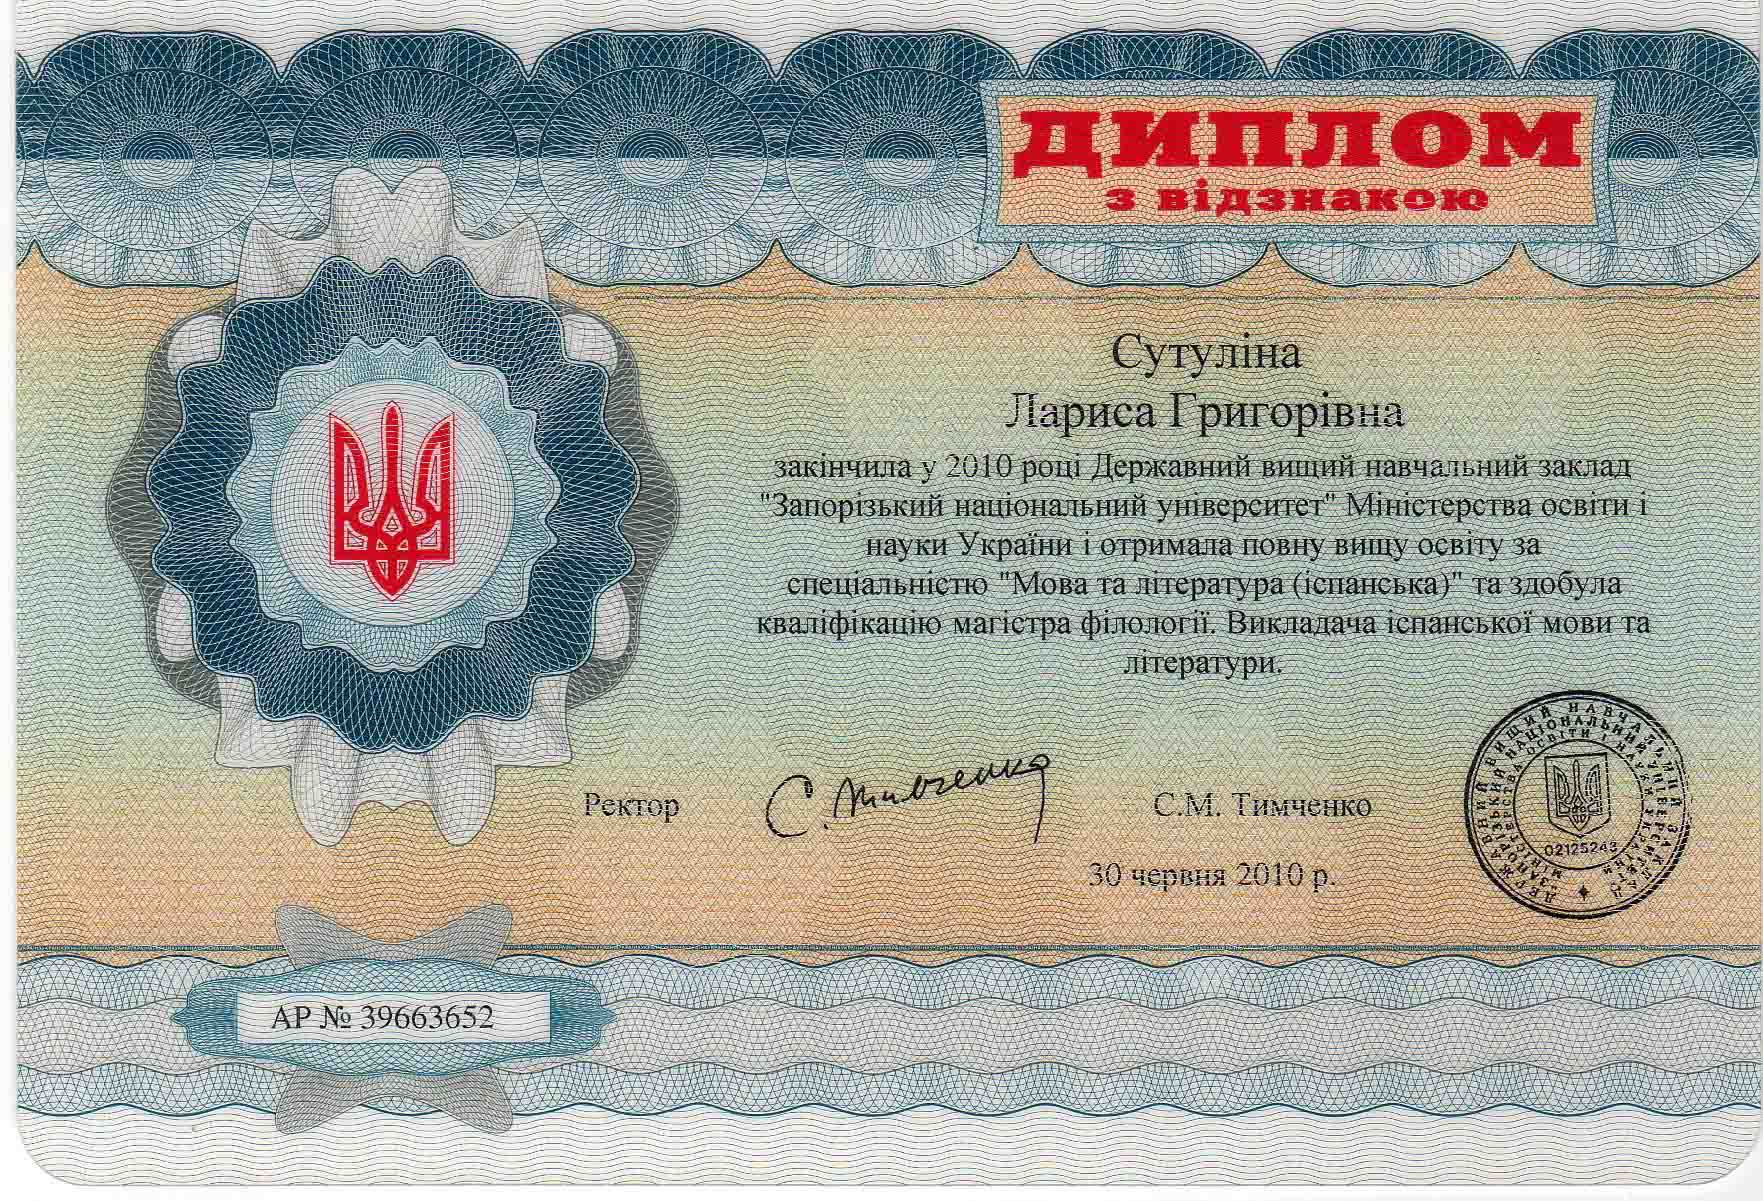 Diploma of university